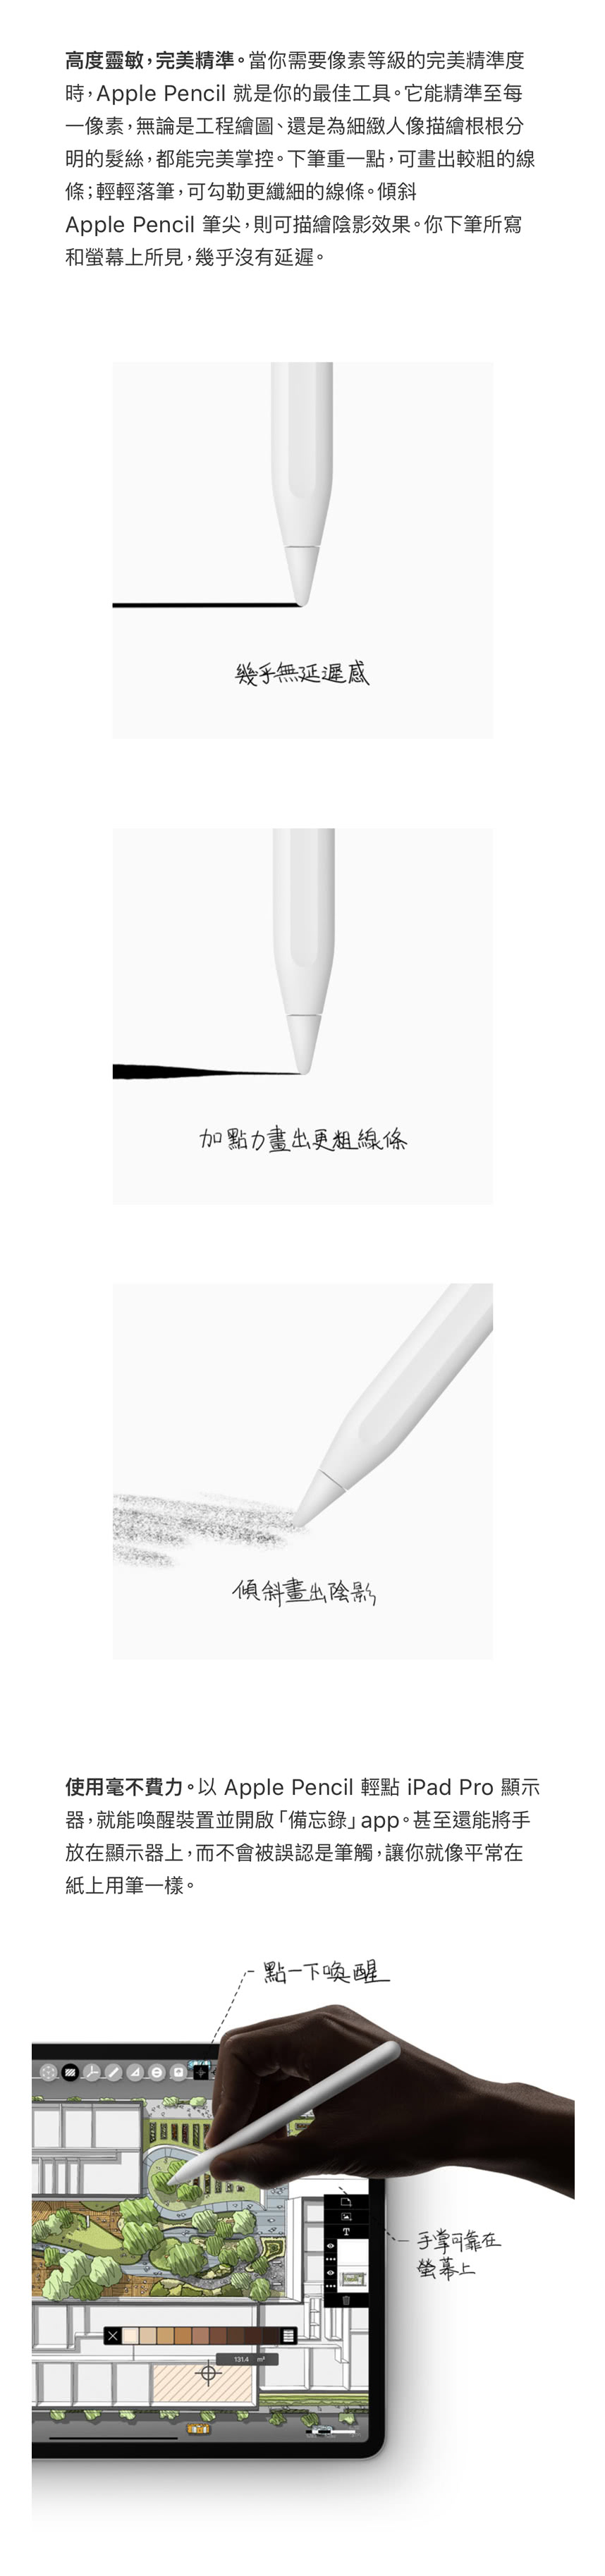 【Apple 蘋果】Apple Pencil 第二代 (MU8F2TA/A)